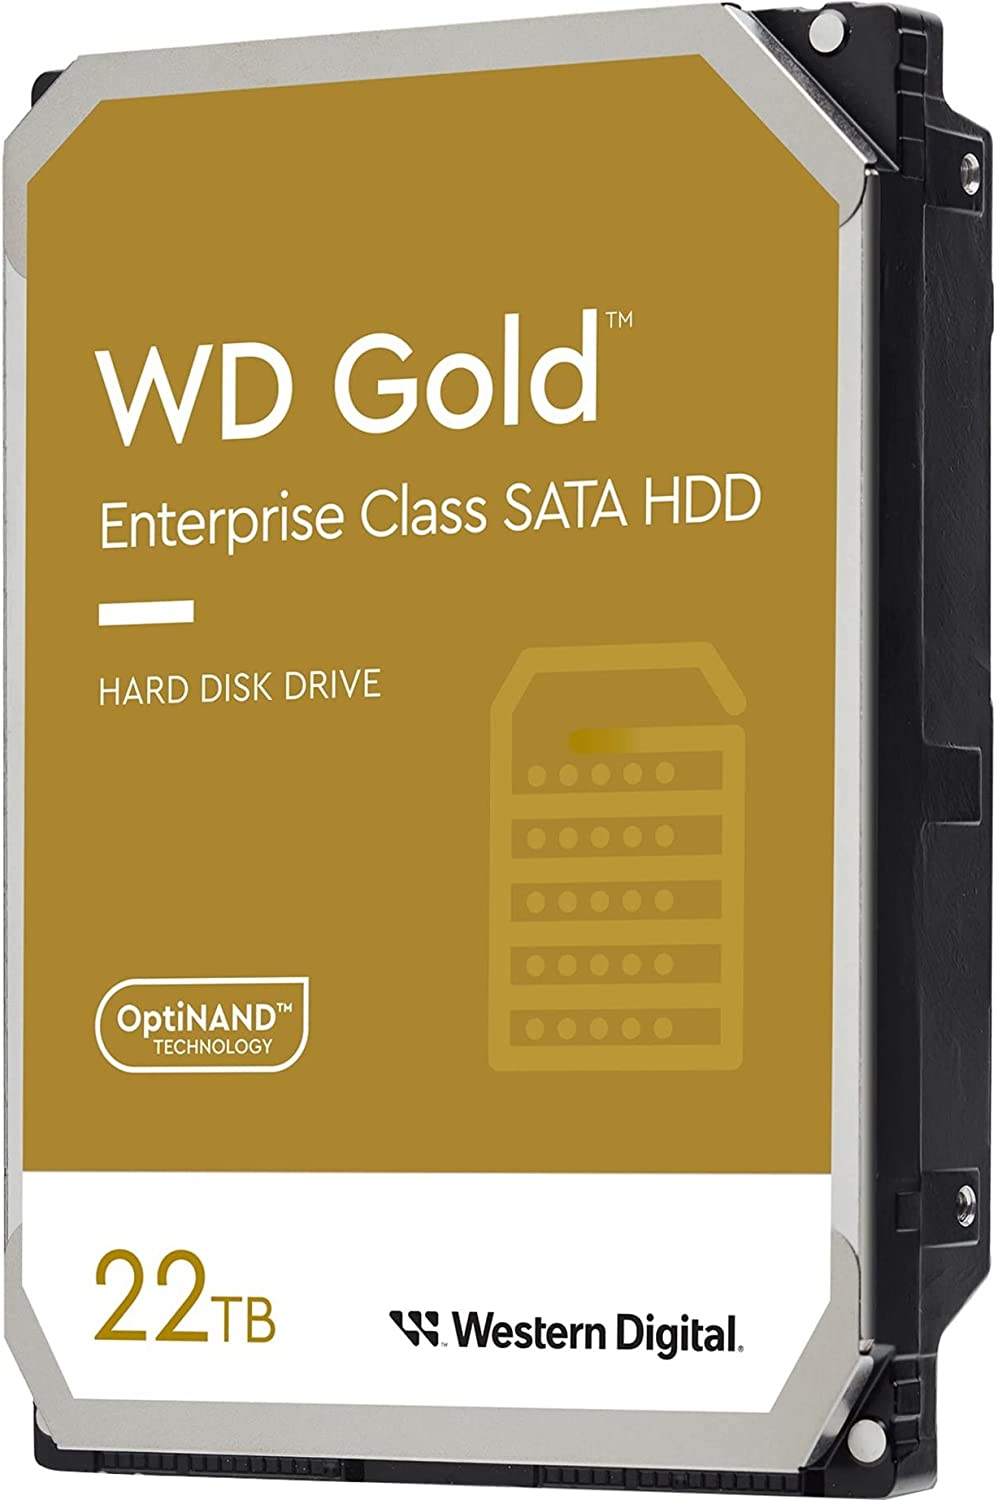 Western Digital 22TB WD Gold Enterprise Class SATA Internal Hard Drive HDD - 7200 RPM, SATA 6 Gb/s, 512 MB Cache, 3.5"- 5 Years Limited Warranty-0